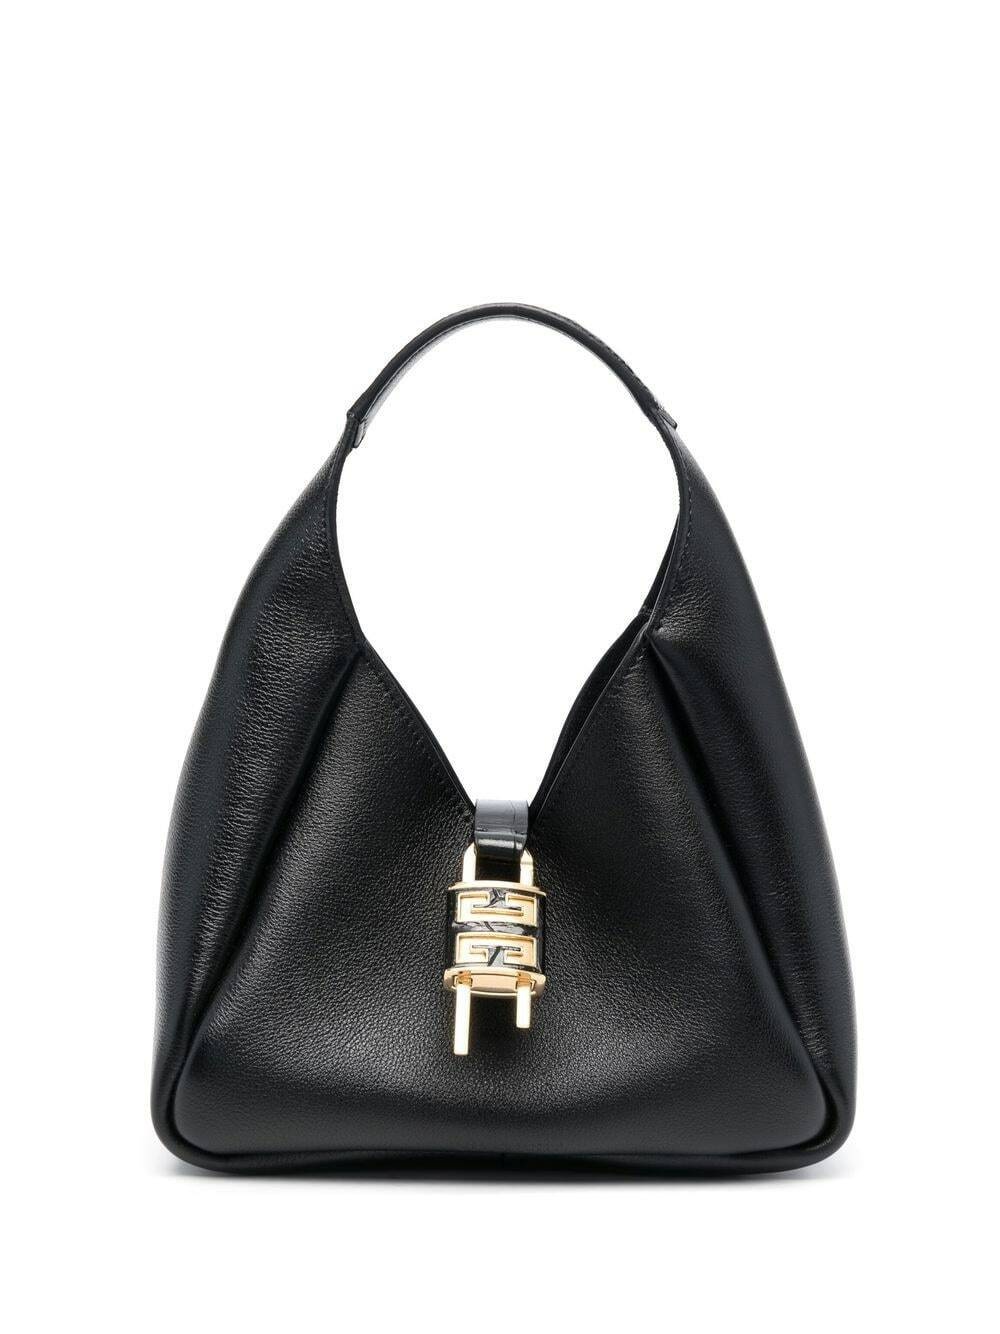 GIVENCHY - Mini Leather Hobo Bag Givenchy